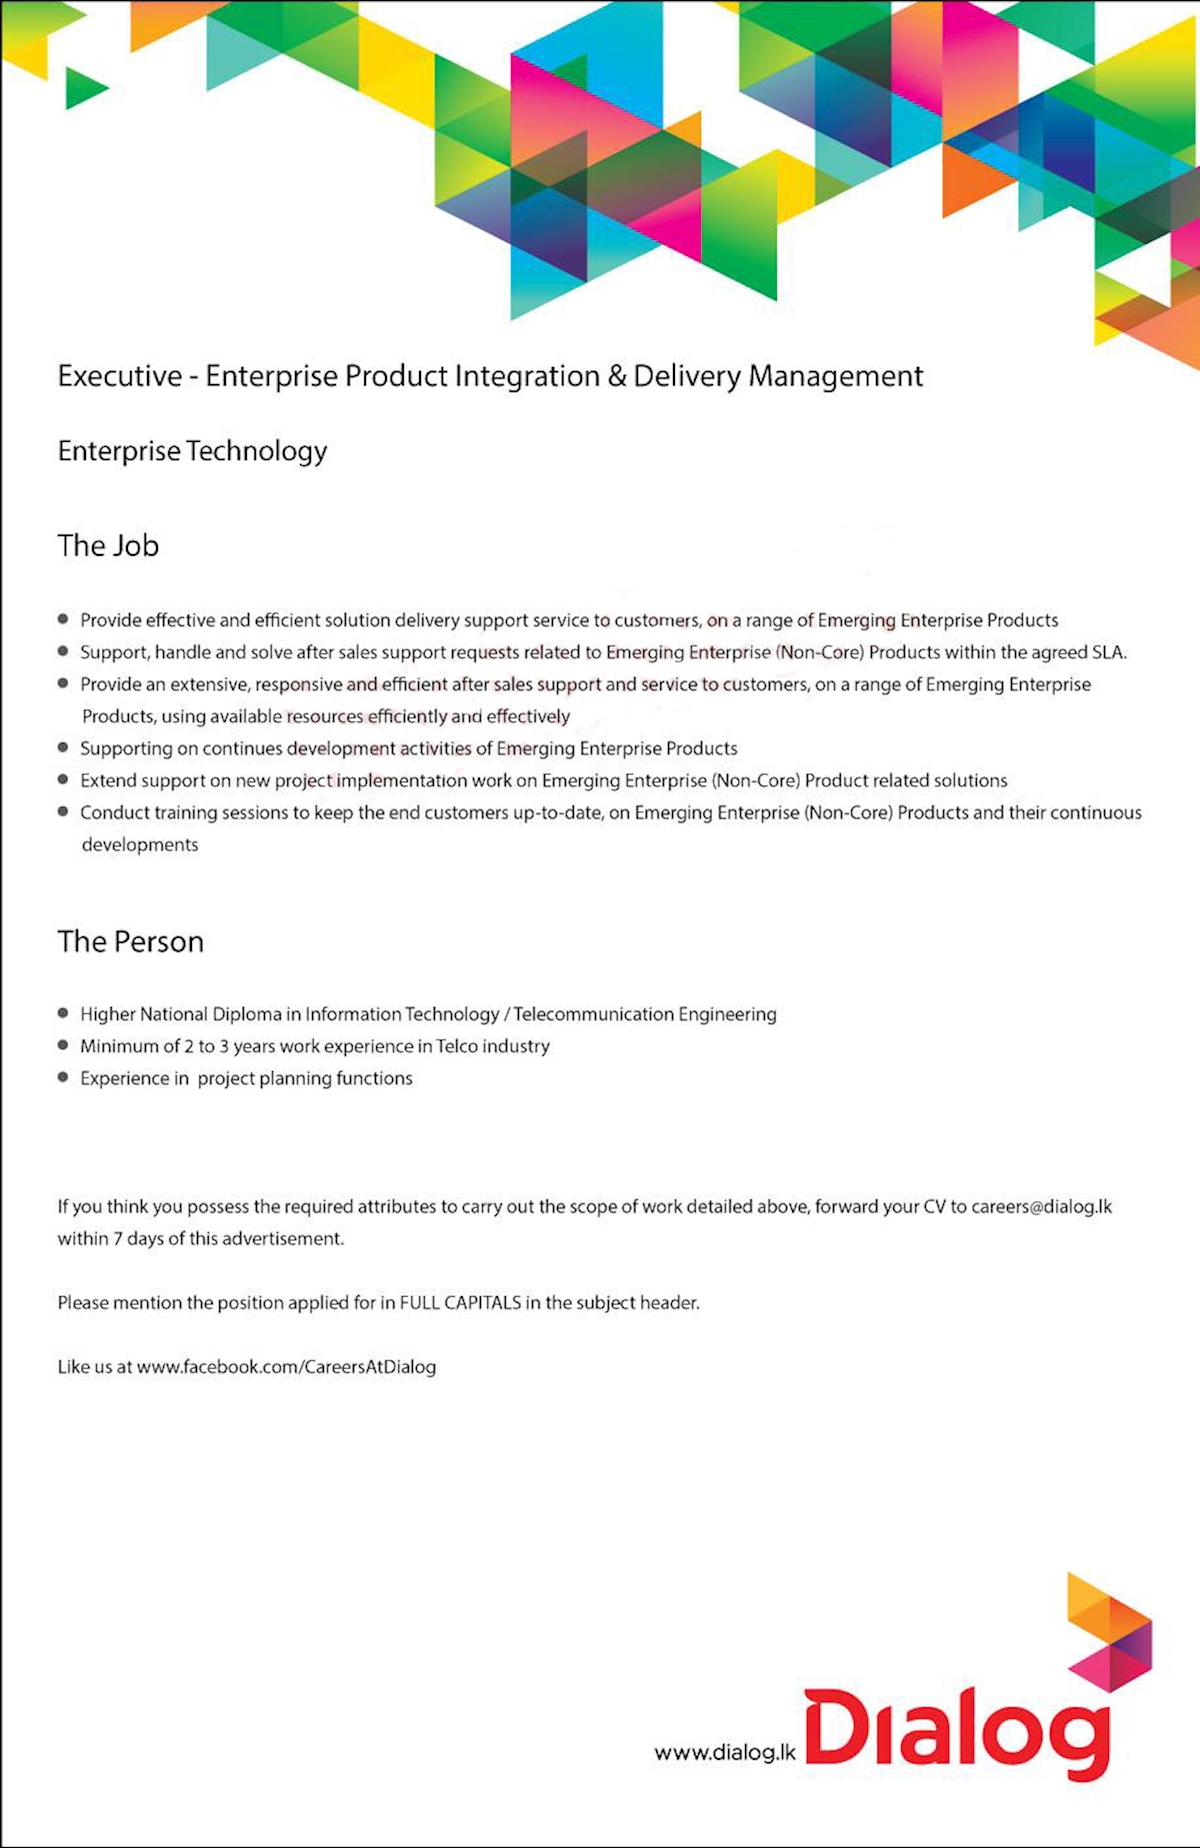 Executive - Enterprise Product Integration & Delivery Management 